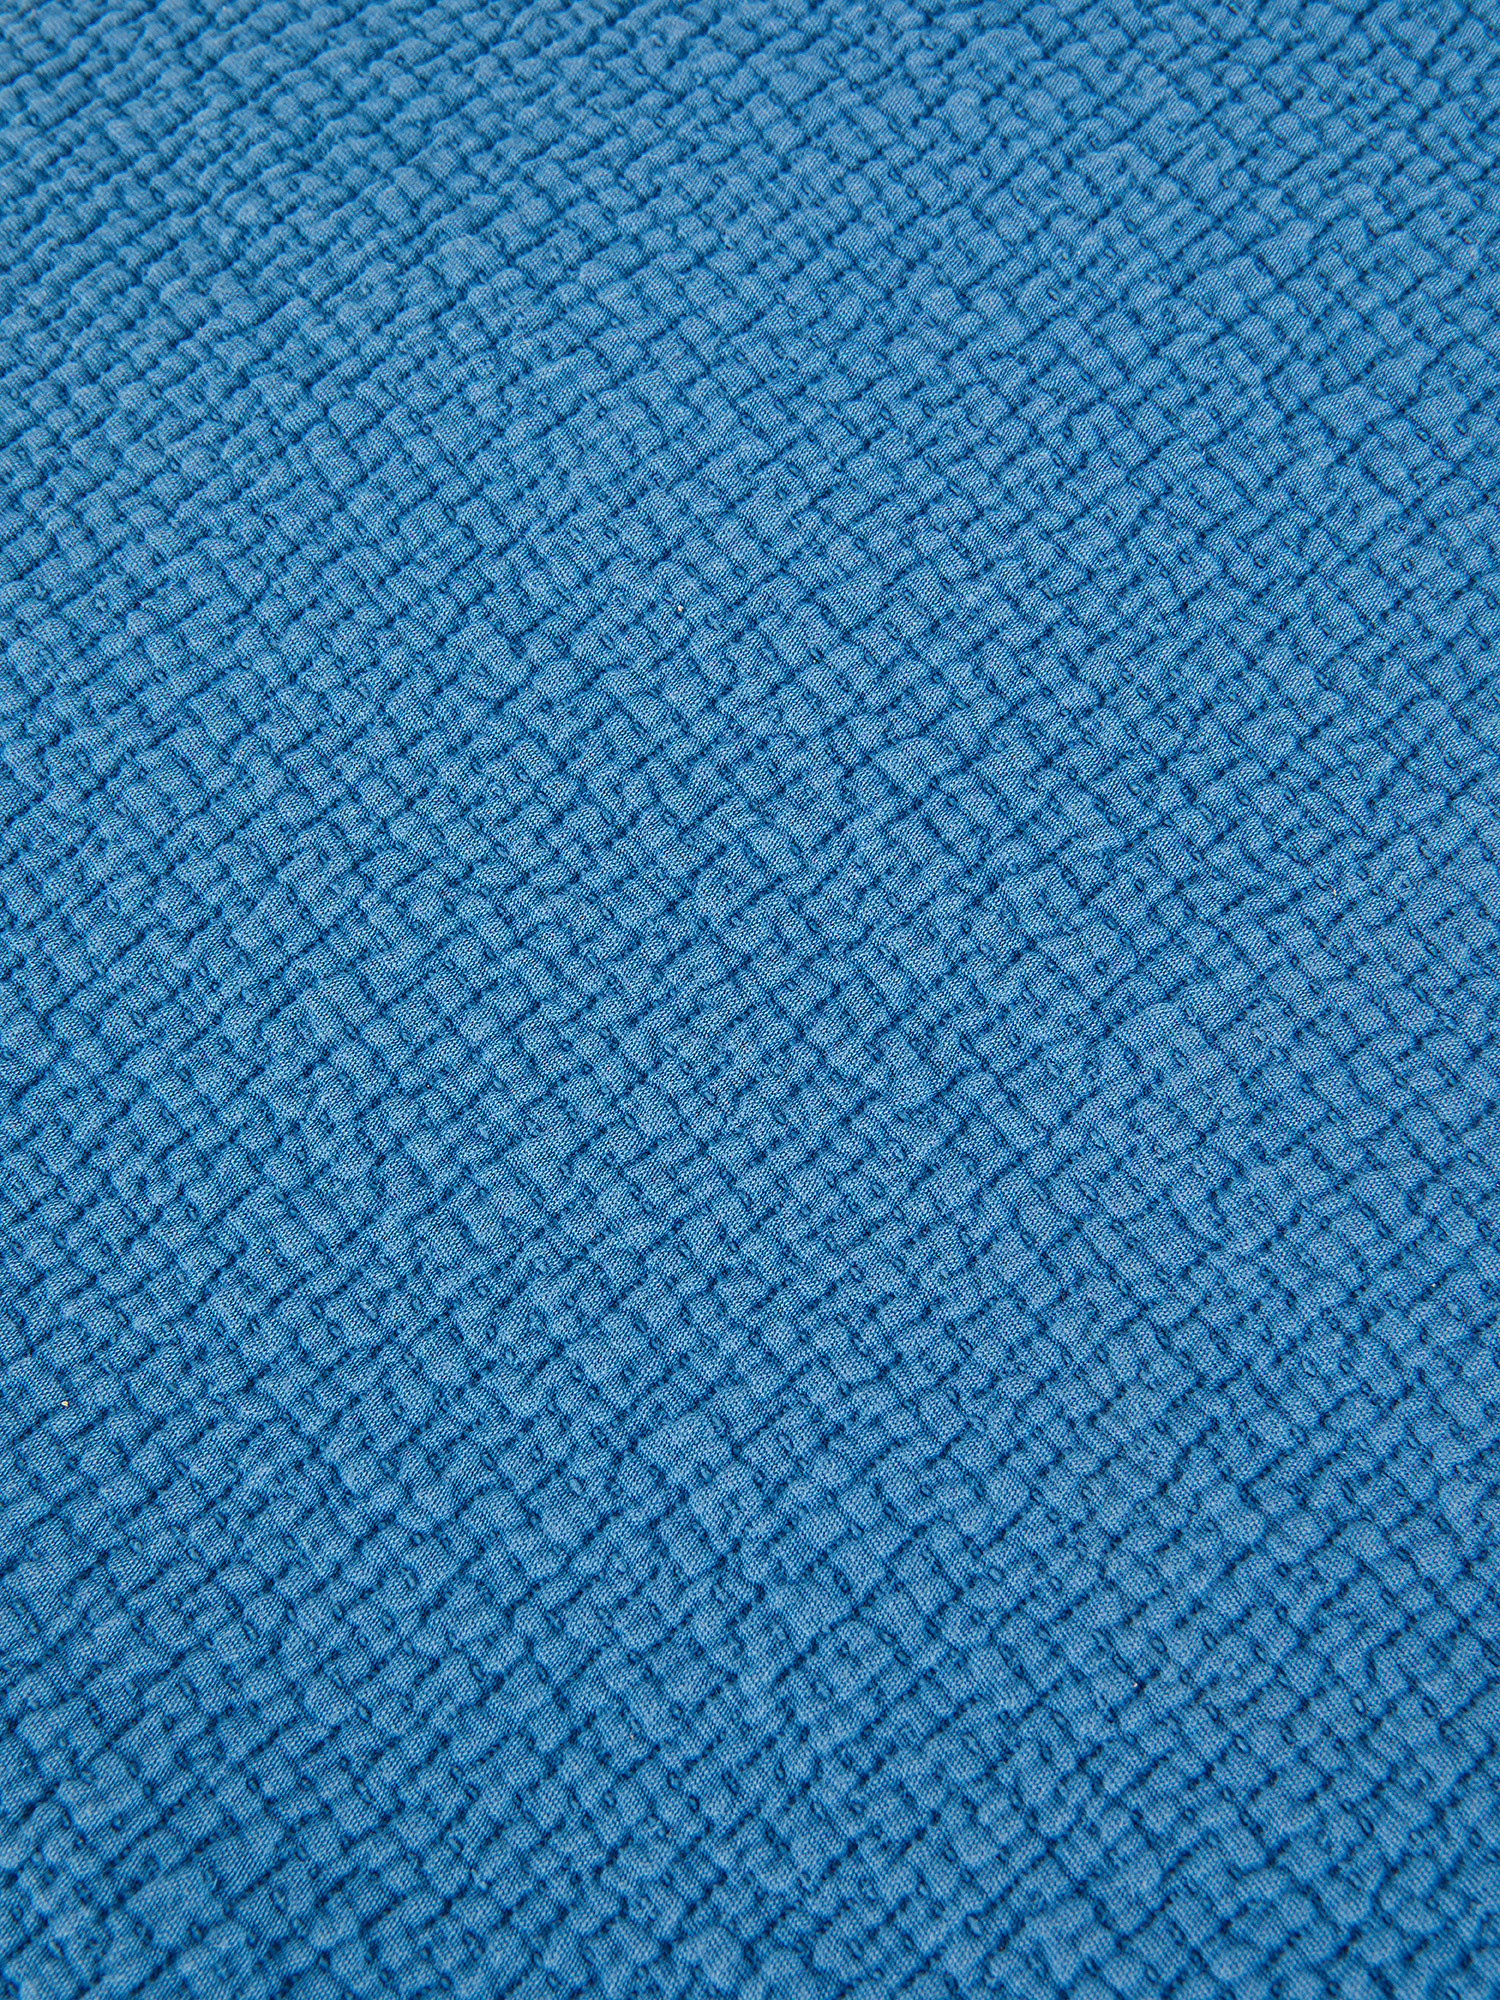 Copriletto puro cotone tinta unita, Blu, large image number 1